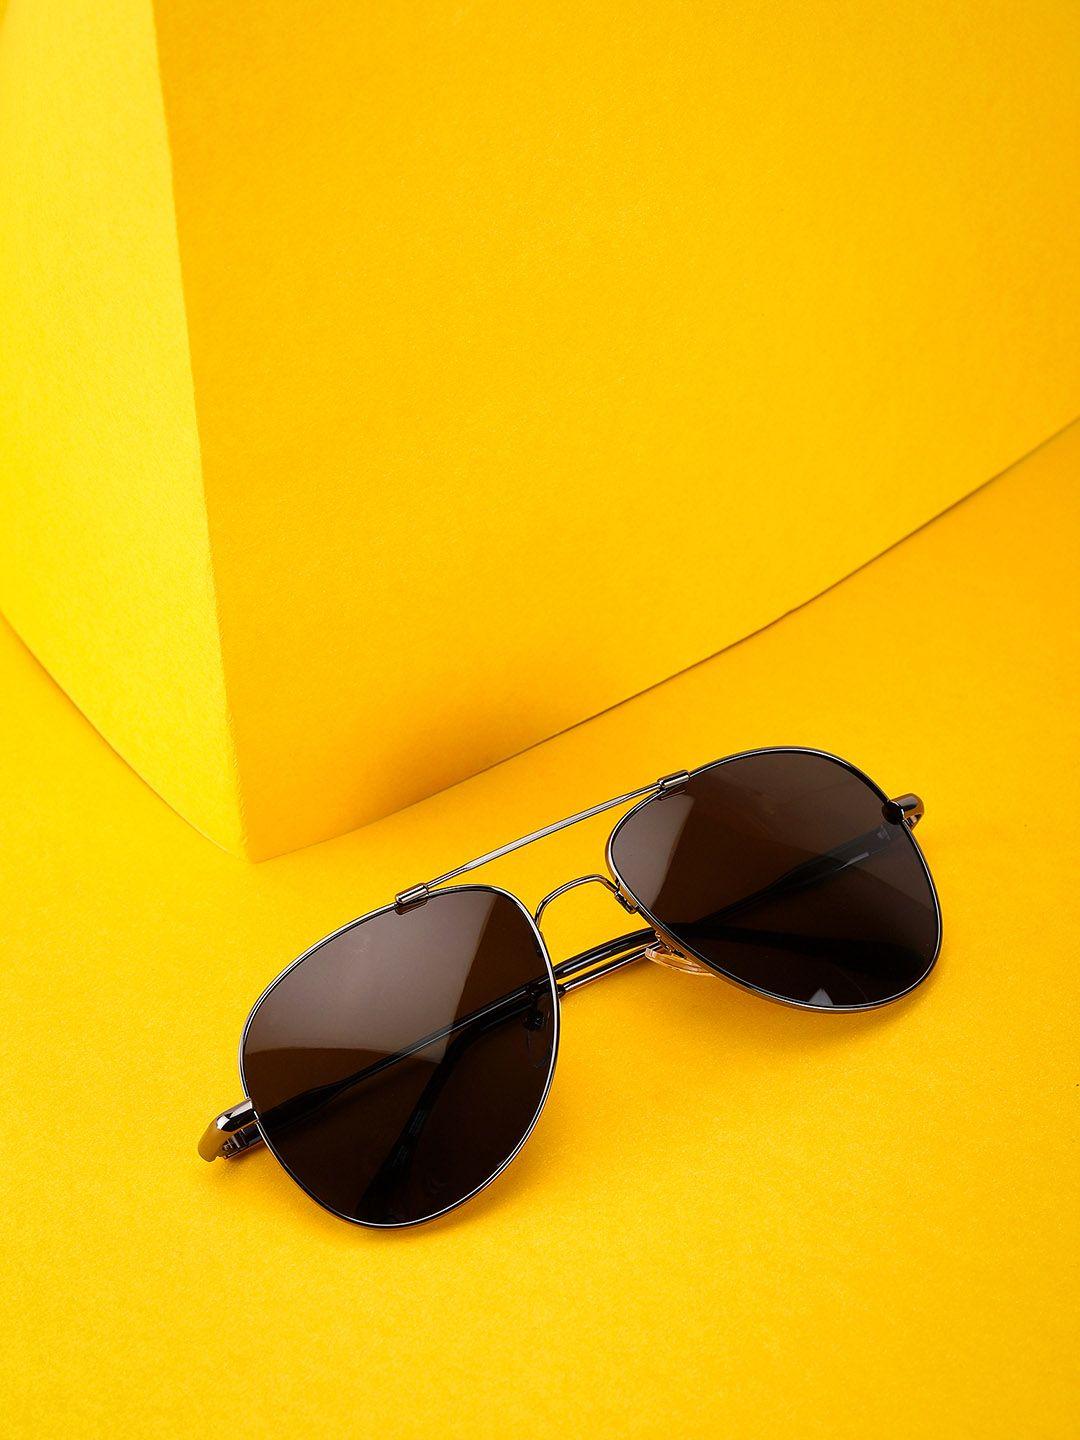 carlton london unisex black lens & gunmetal-toned aviator sunglasses with uv protected lens